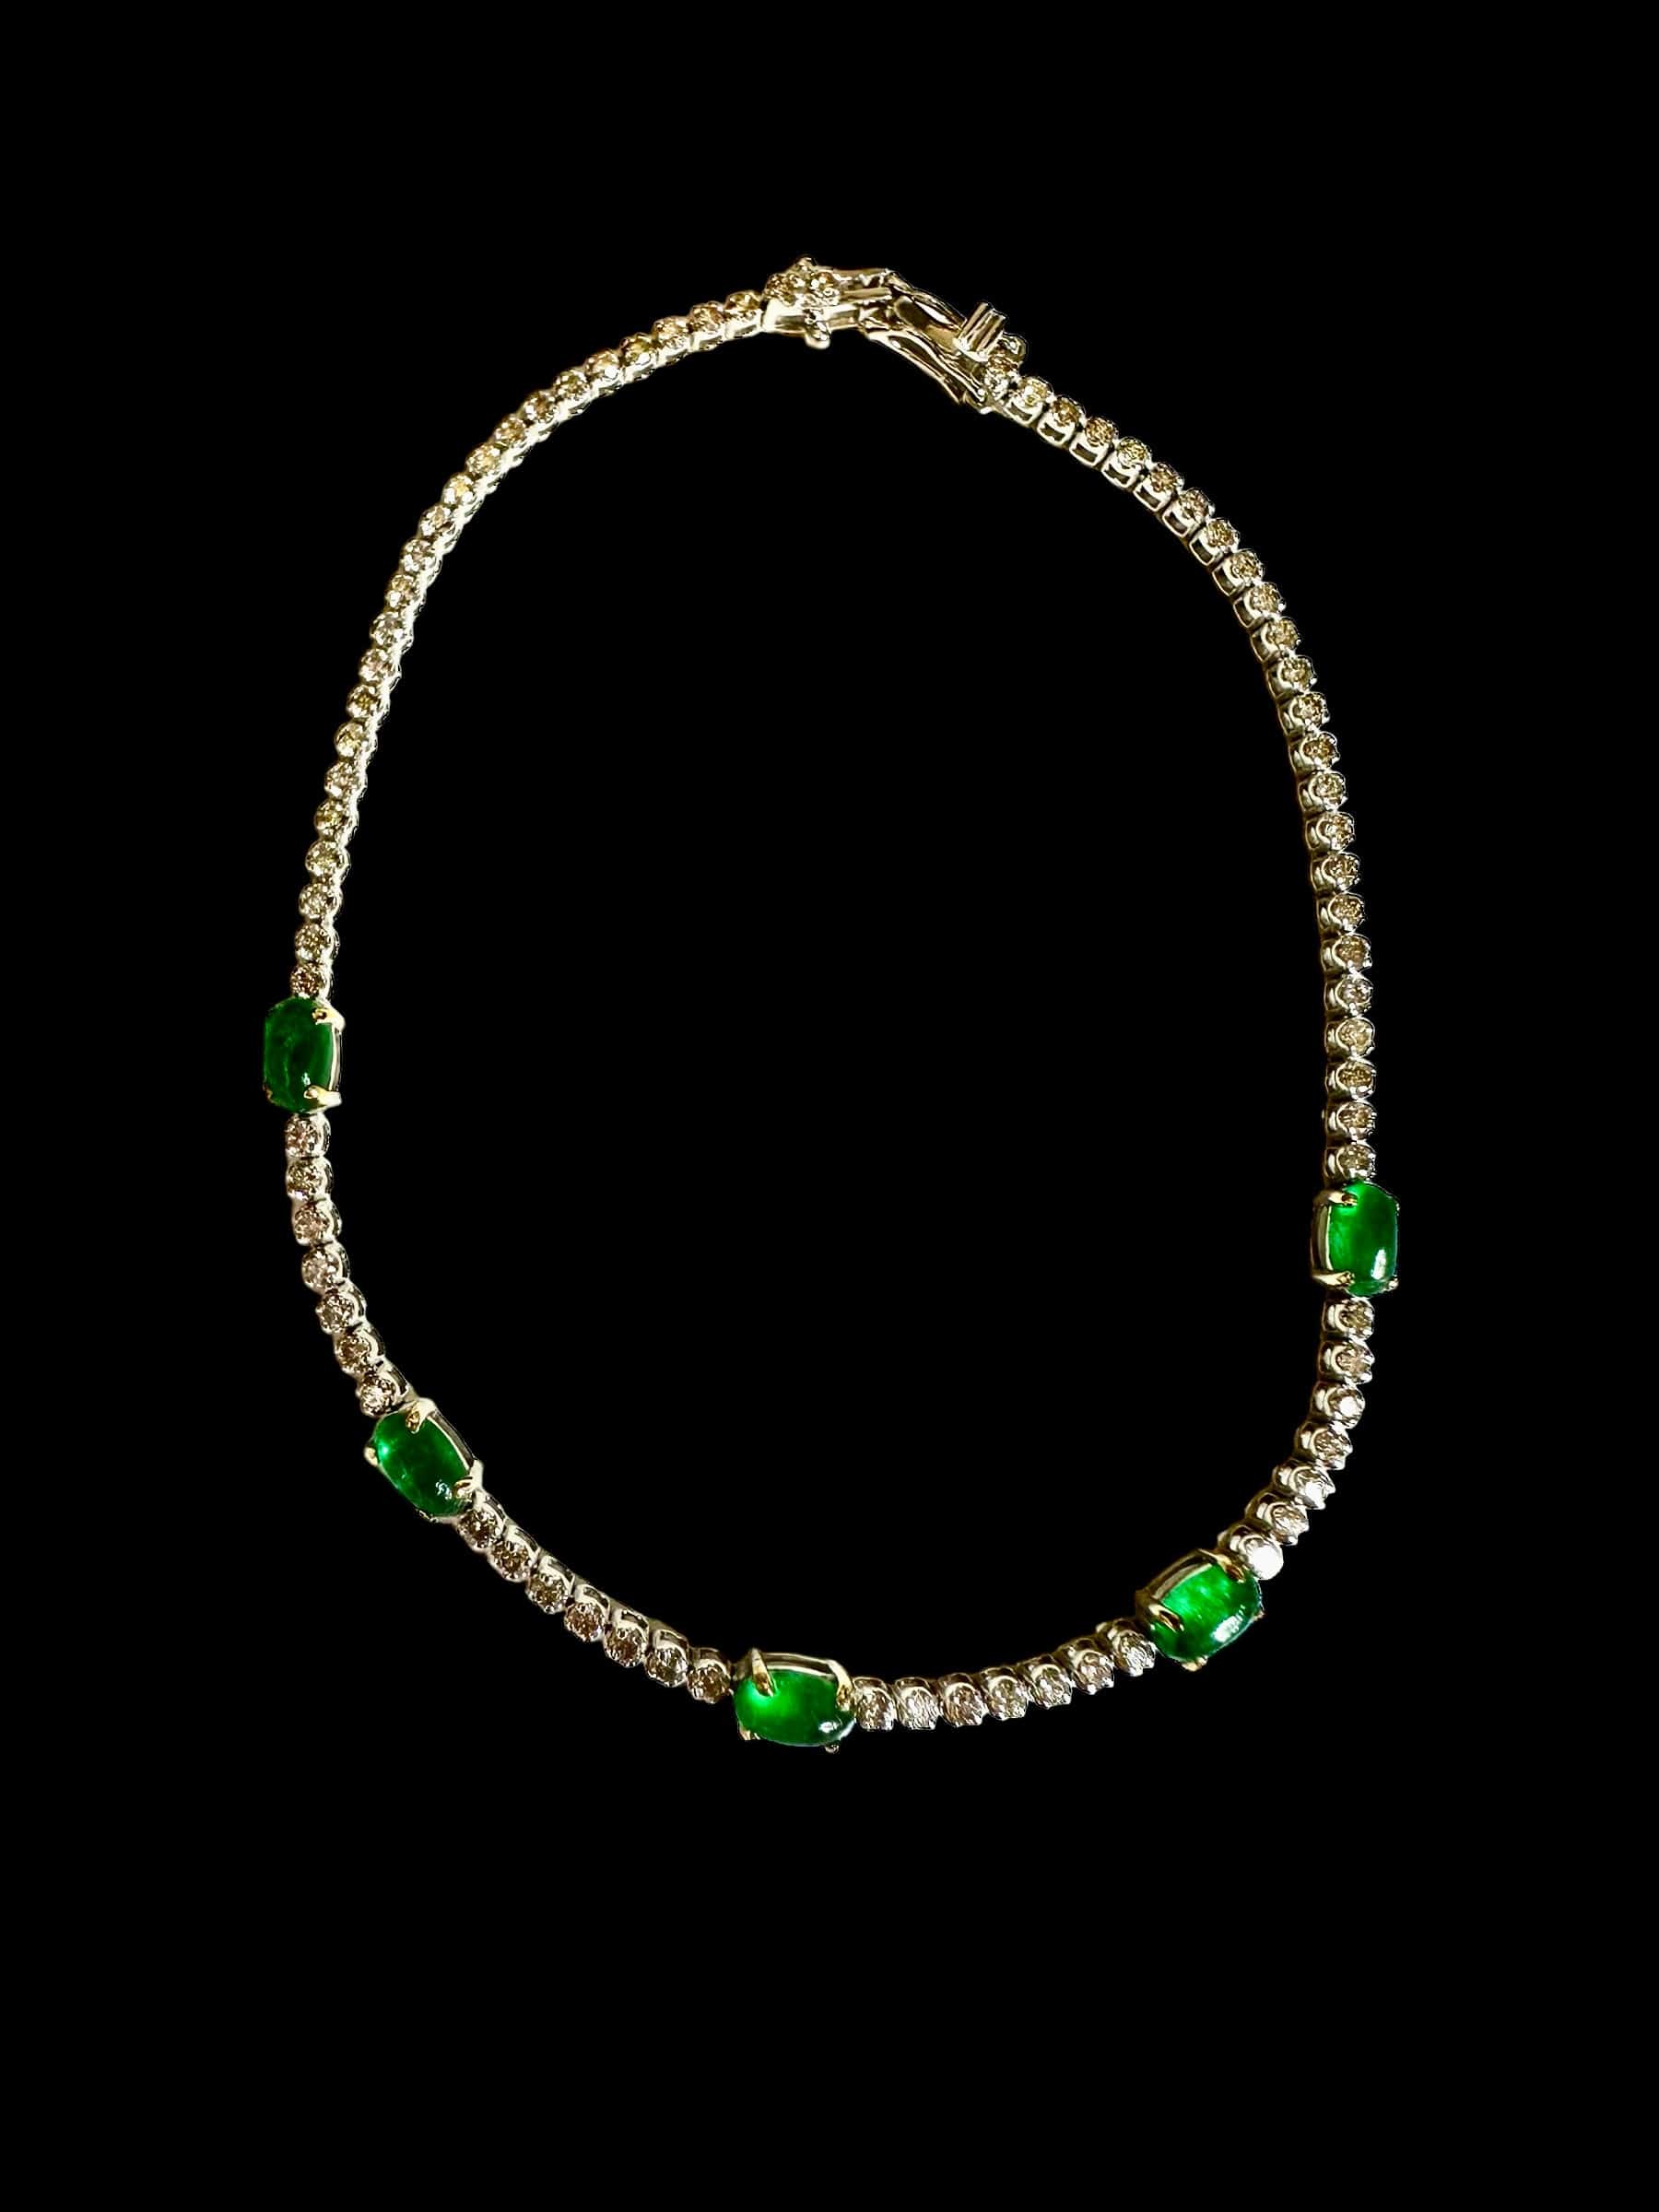 Luxury Promise Emerald & Diamond bracelet tennis bracelet